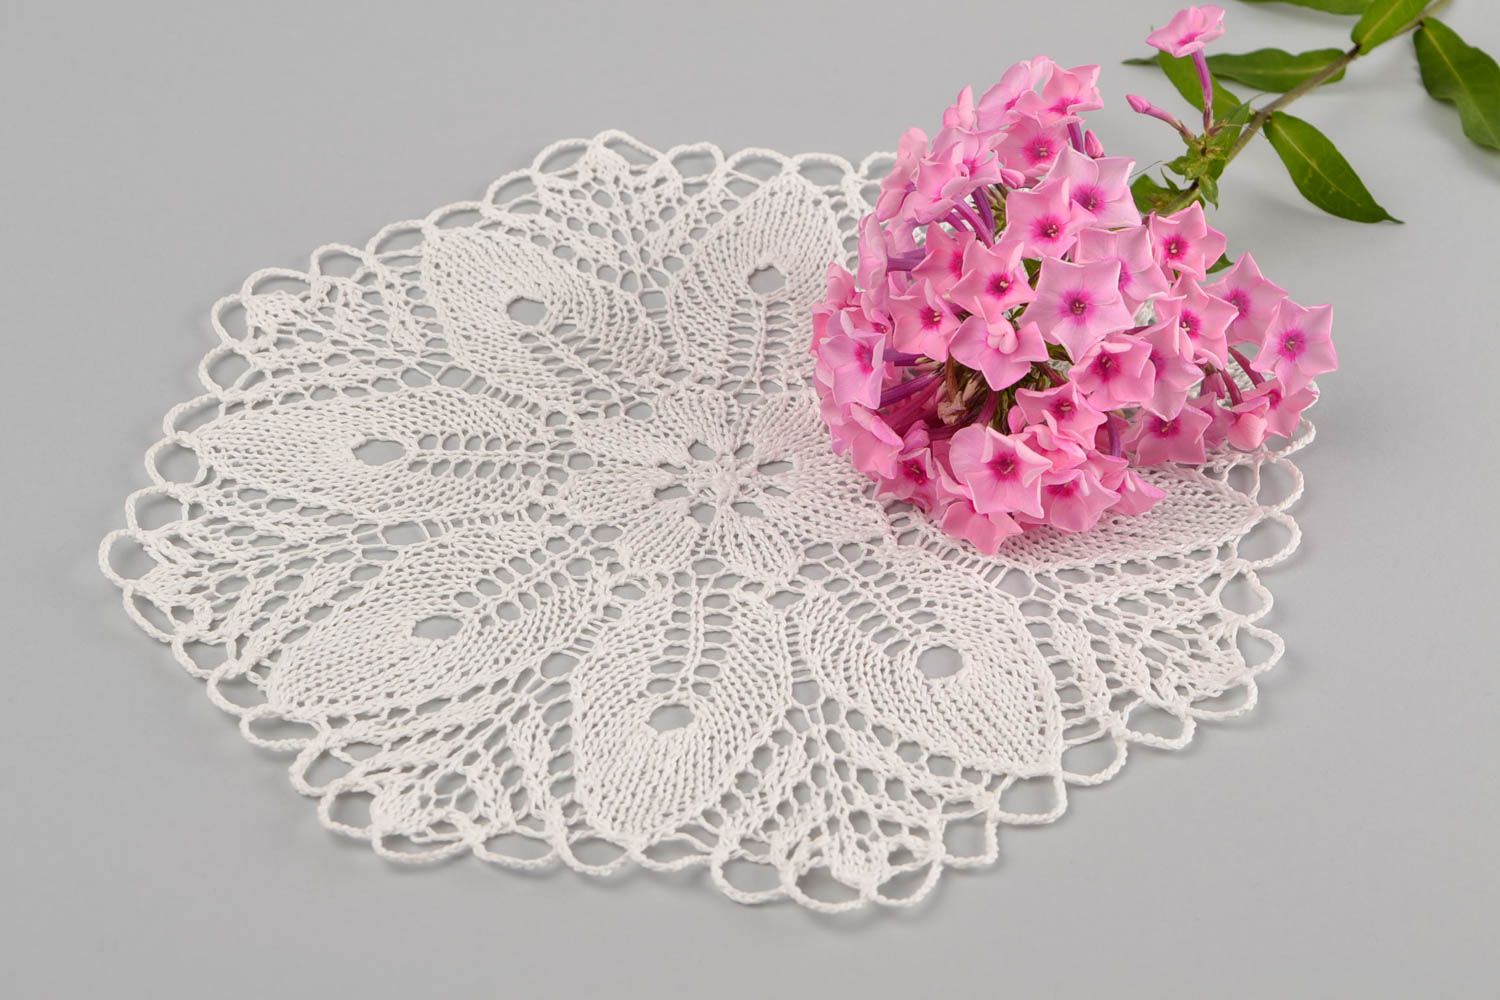 Unique knitted napkin cotton designer tablecloth for interior present ideas photo 1